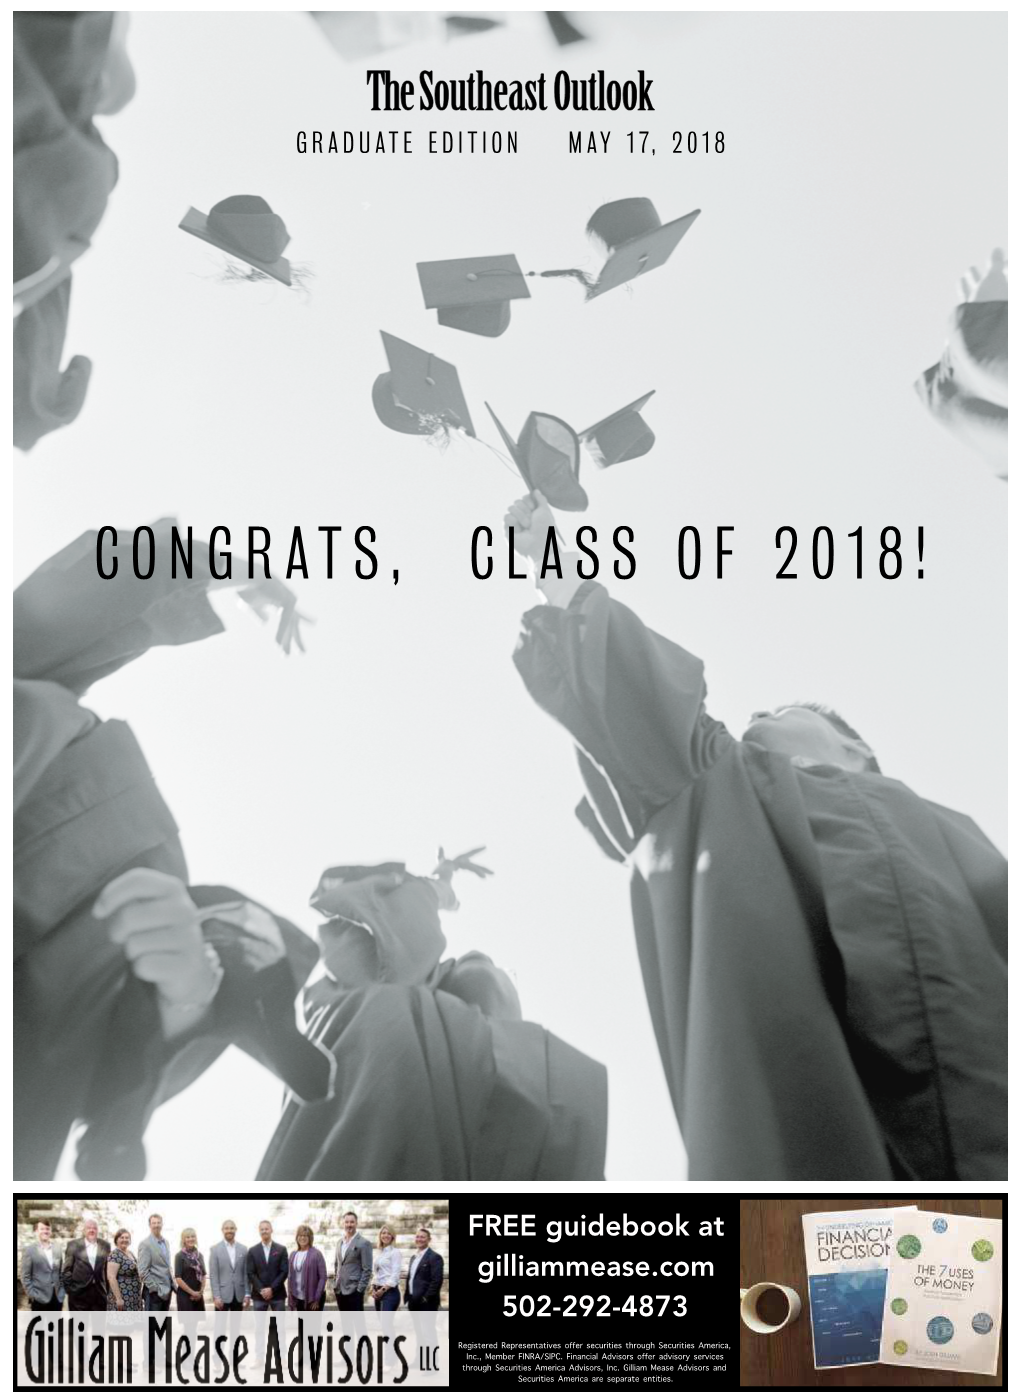 Congrats, Class of 2018!